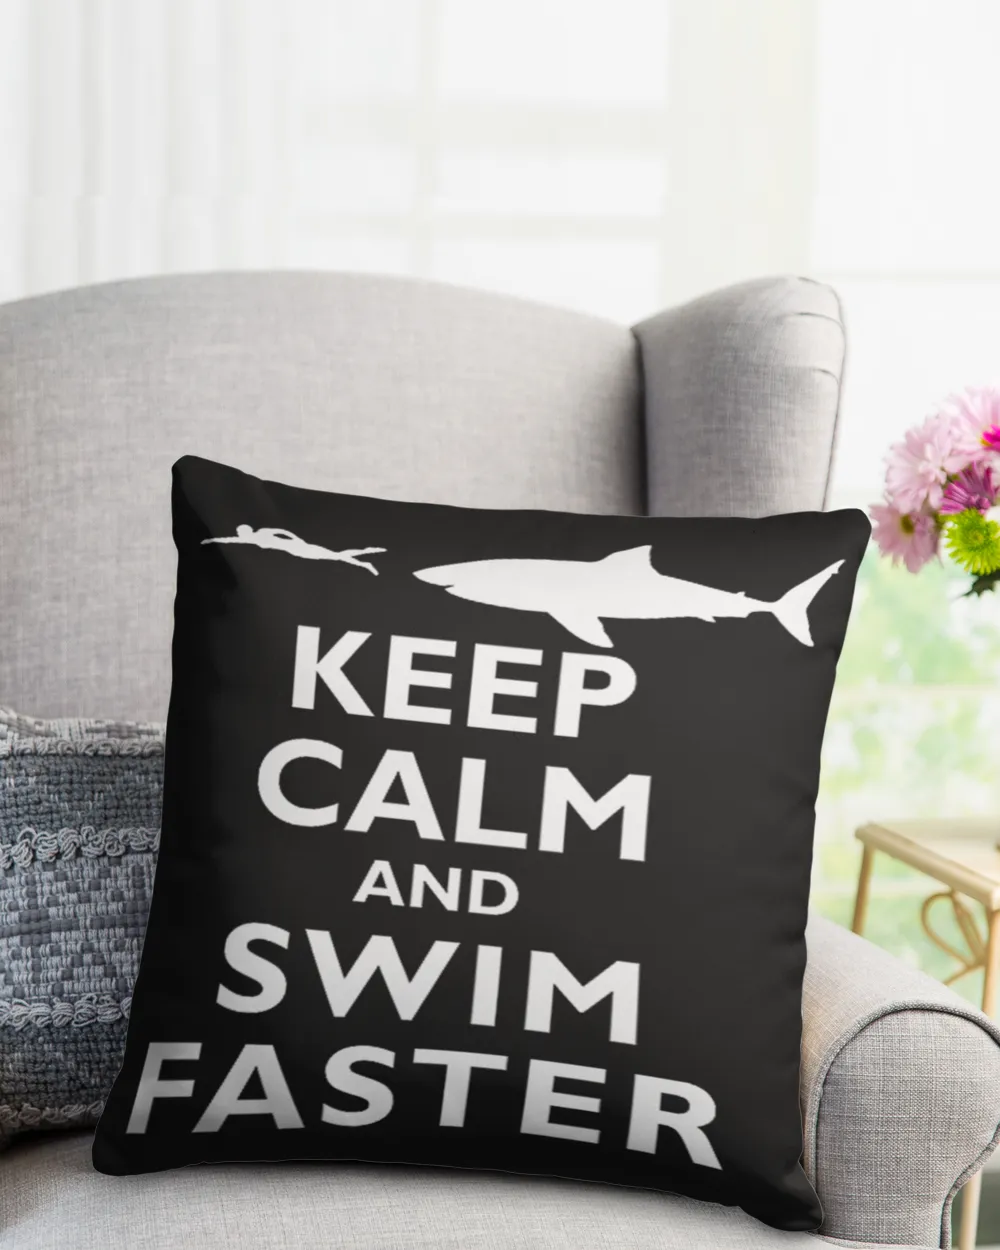 Keep calm and swim faster